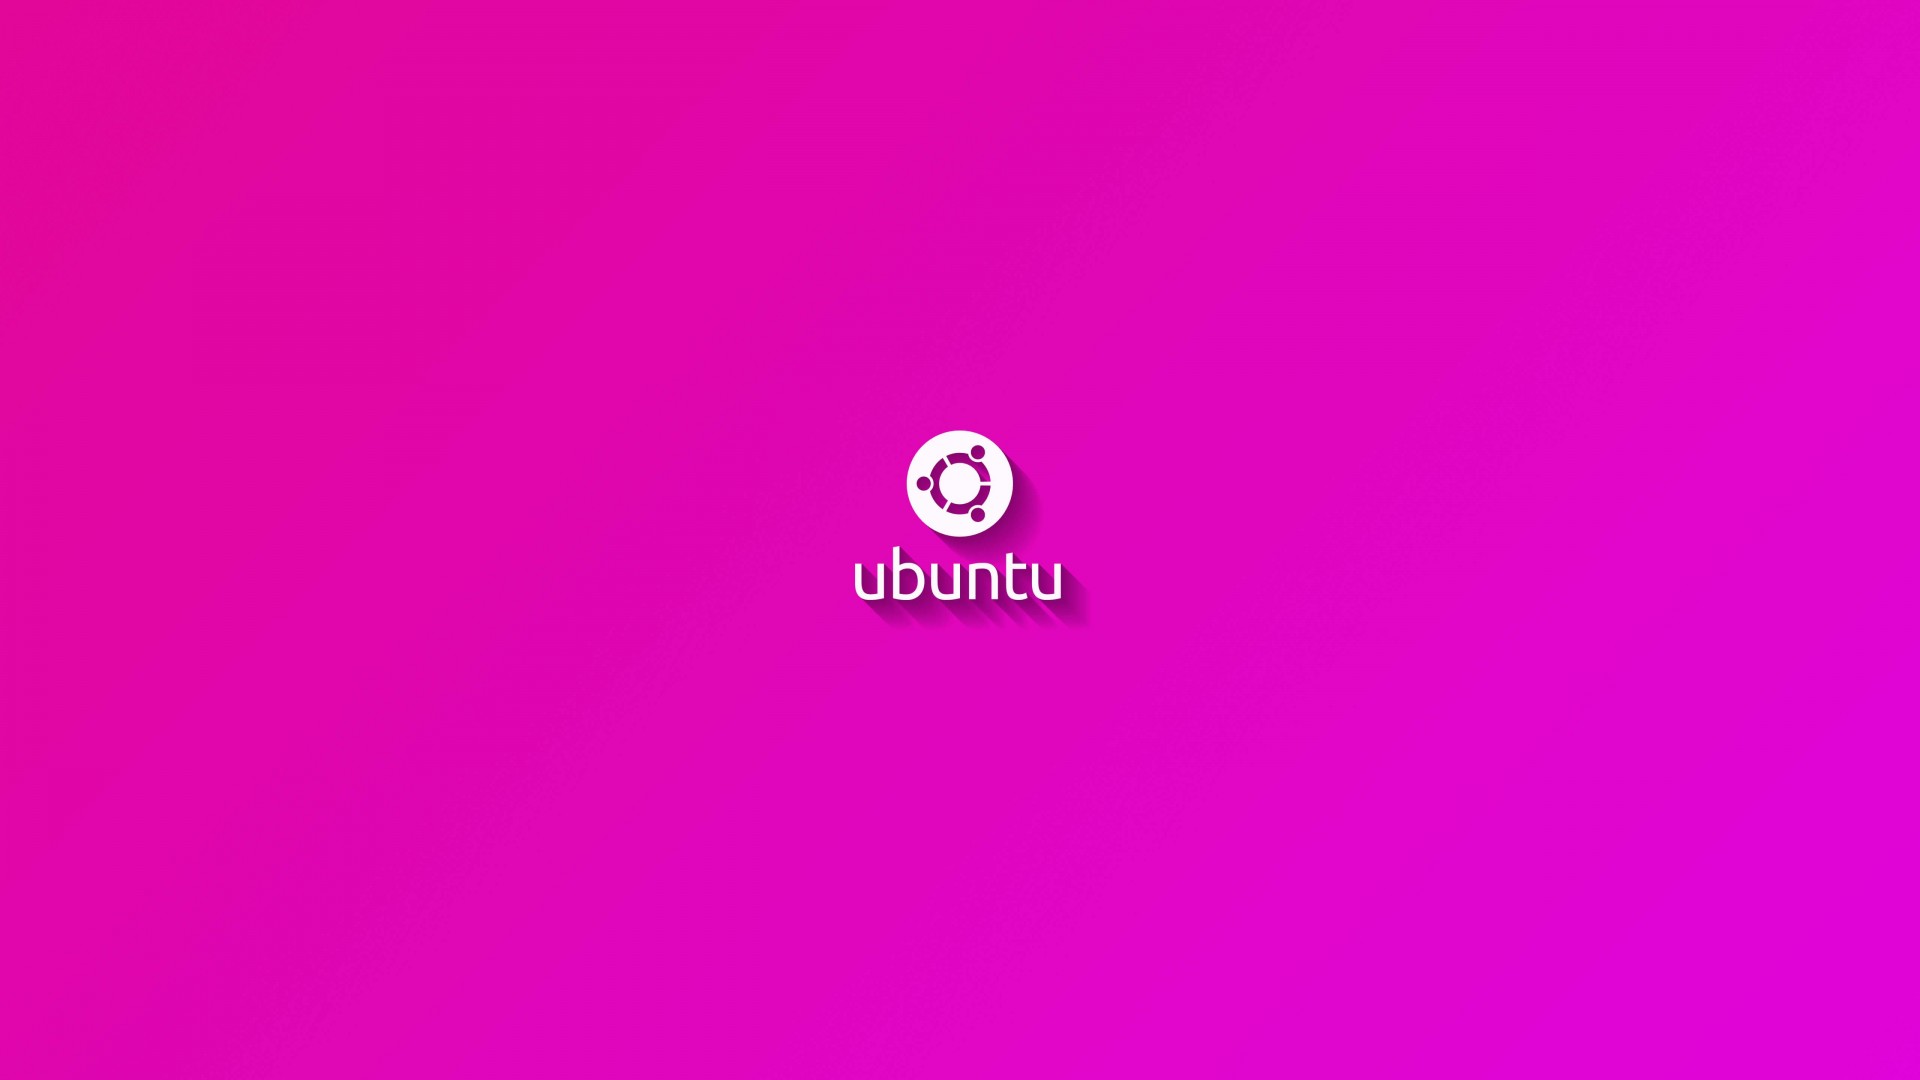 Ubuntu Flat Shadow Pink Wallpaper for Desktop 1920x1080